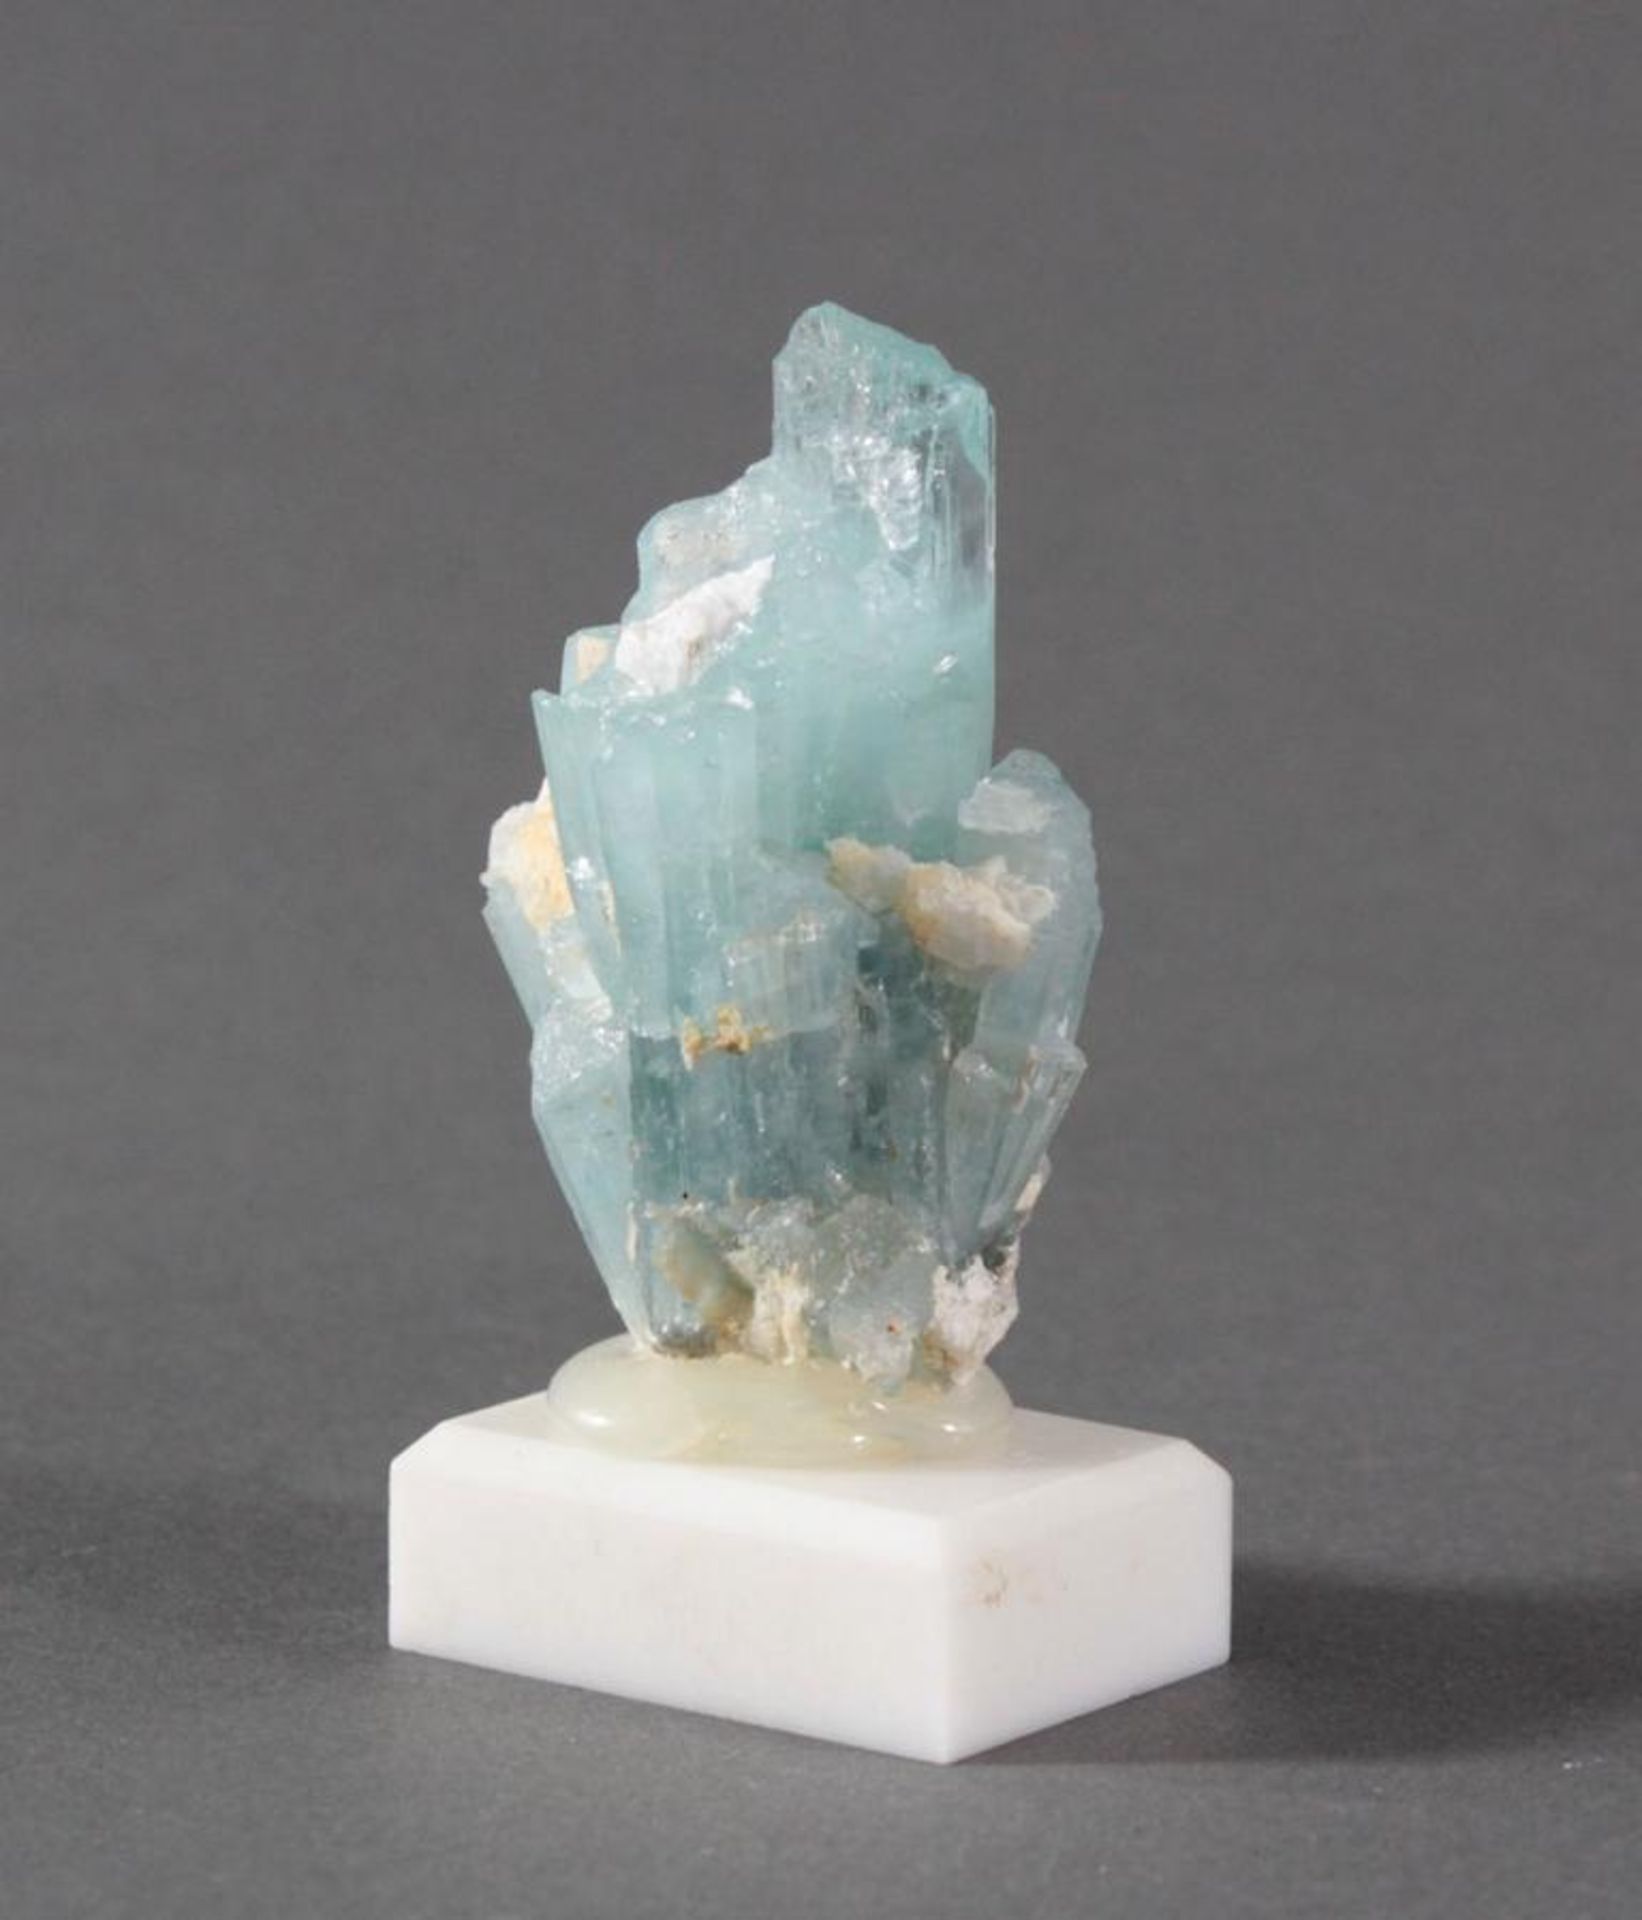 Aquamarin beendeter Crystal, Transparent Sky Blue aus Pakistan68 g, ca. 340 ct. Höhe 6 cm ohne - Image 2 of 3